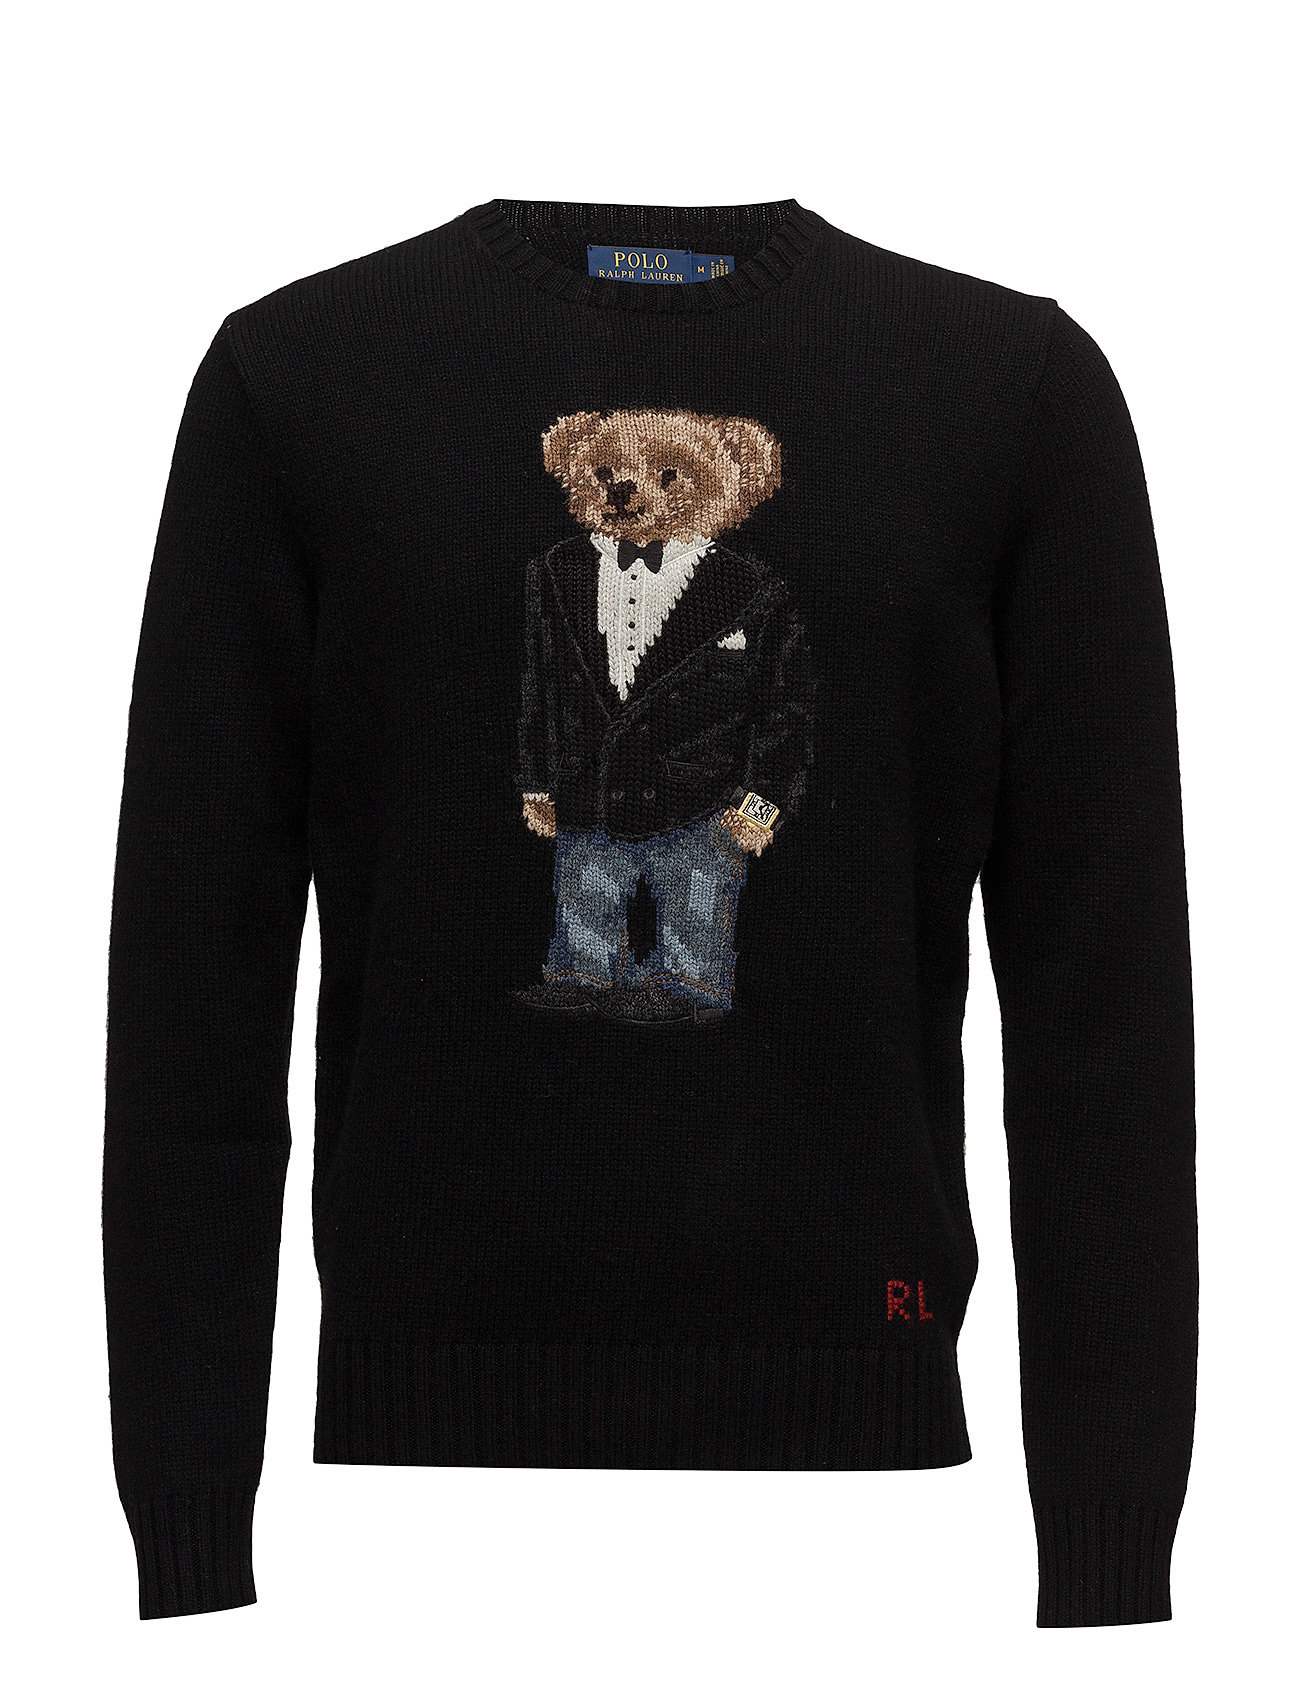 Tuxedo Bear Wool Sweater (Black) (£345) - Polo Ralph Lauren | Boozt.com